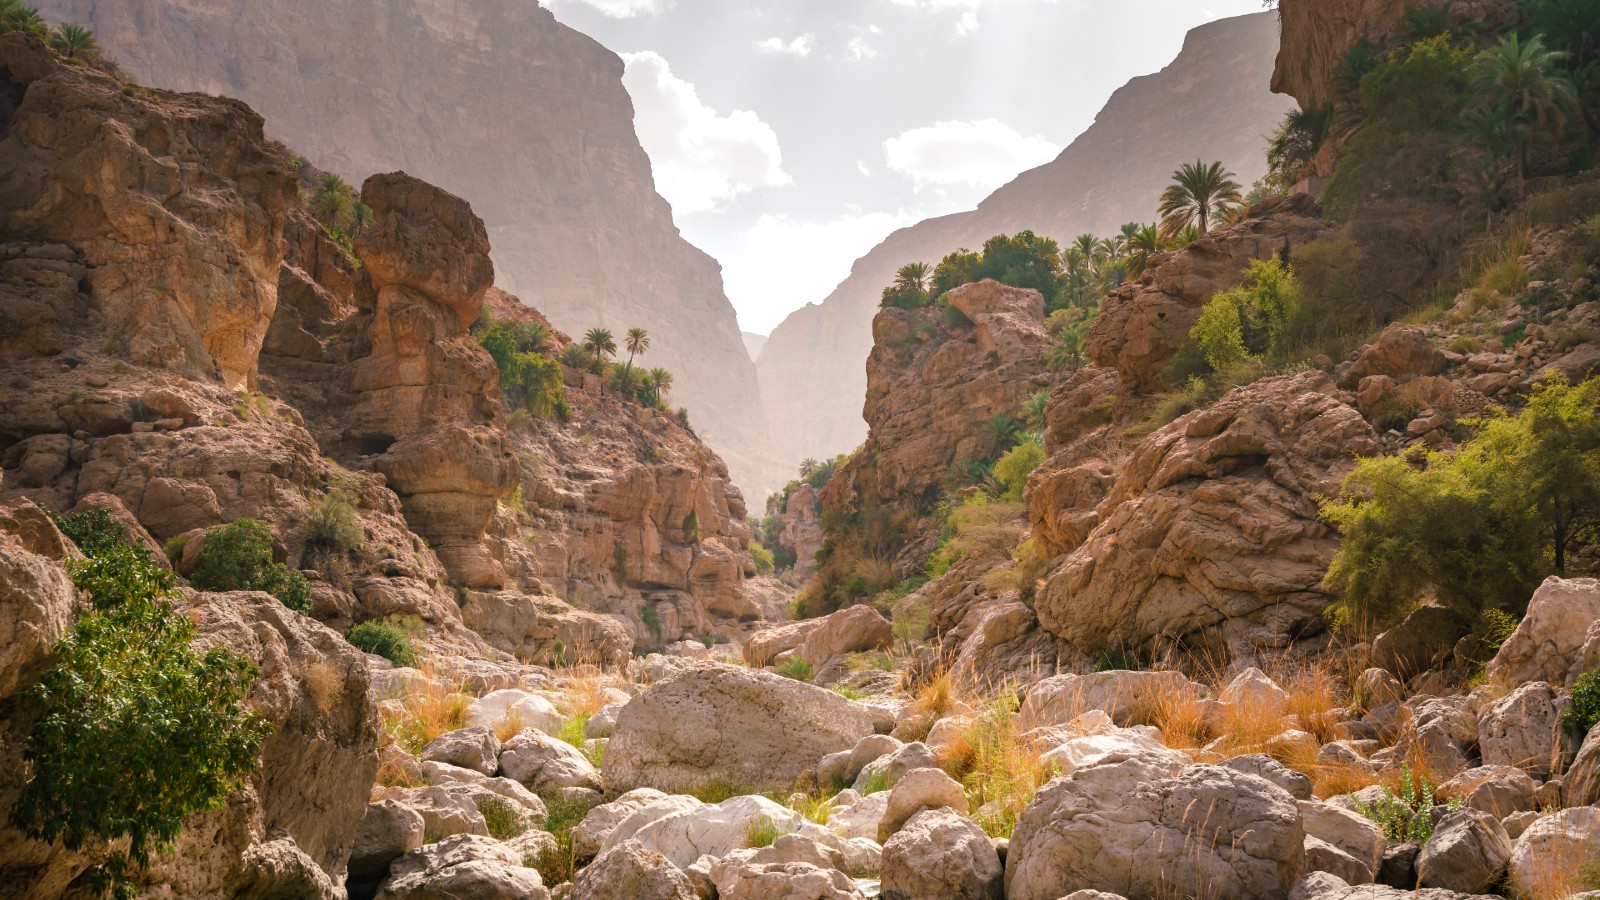 Rocky ground around the mountain areas in Oman